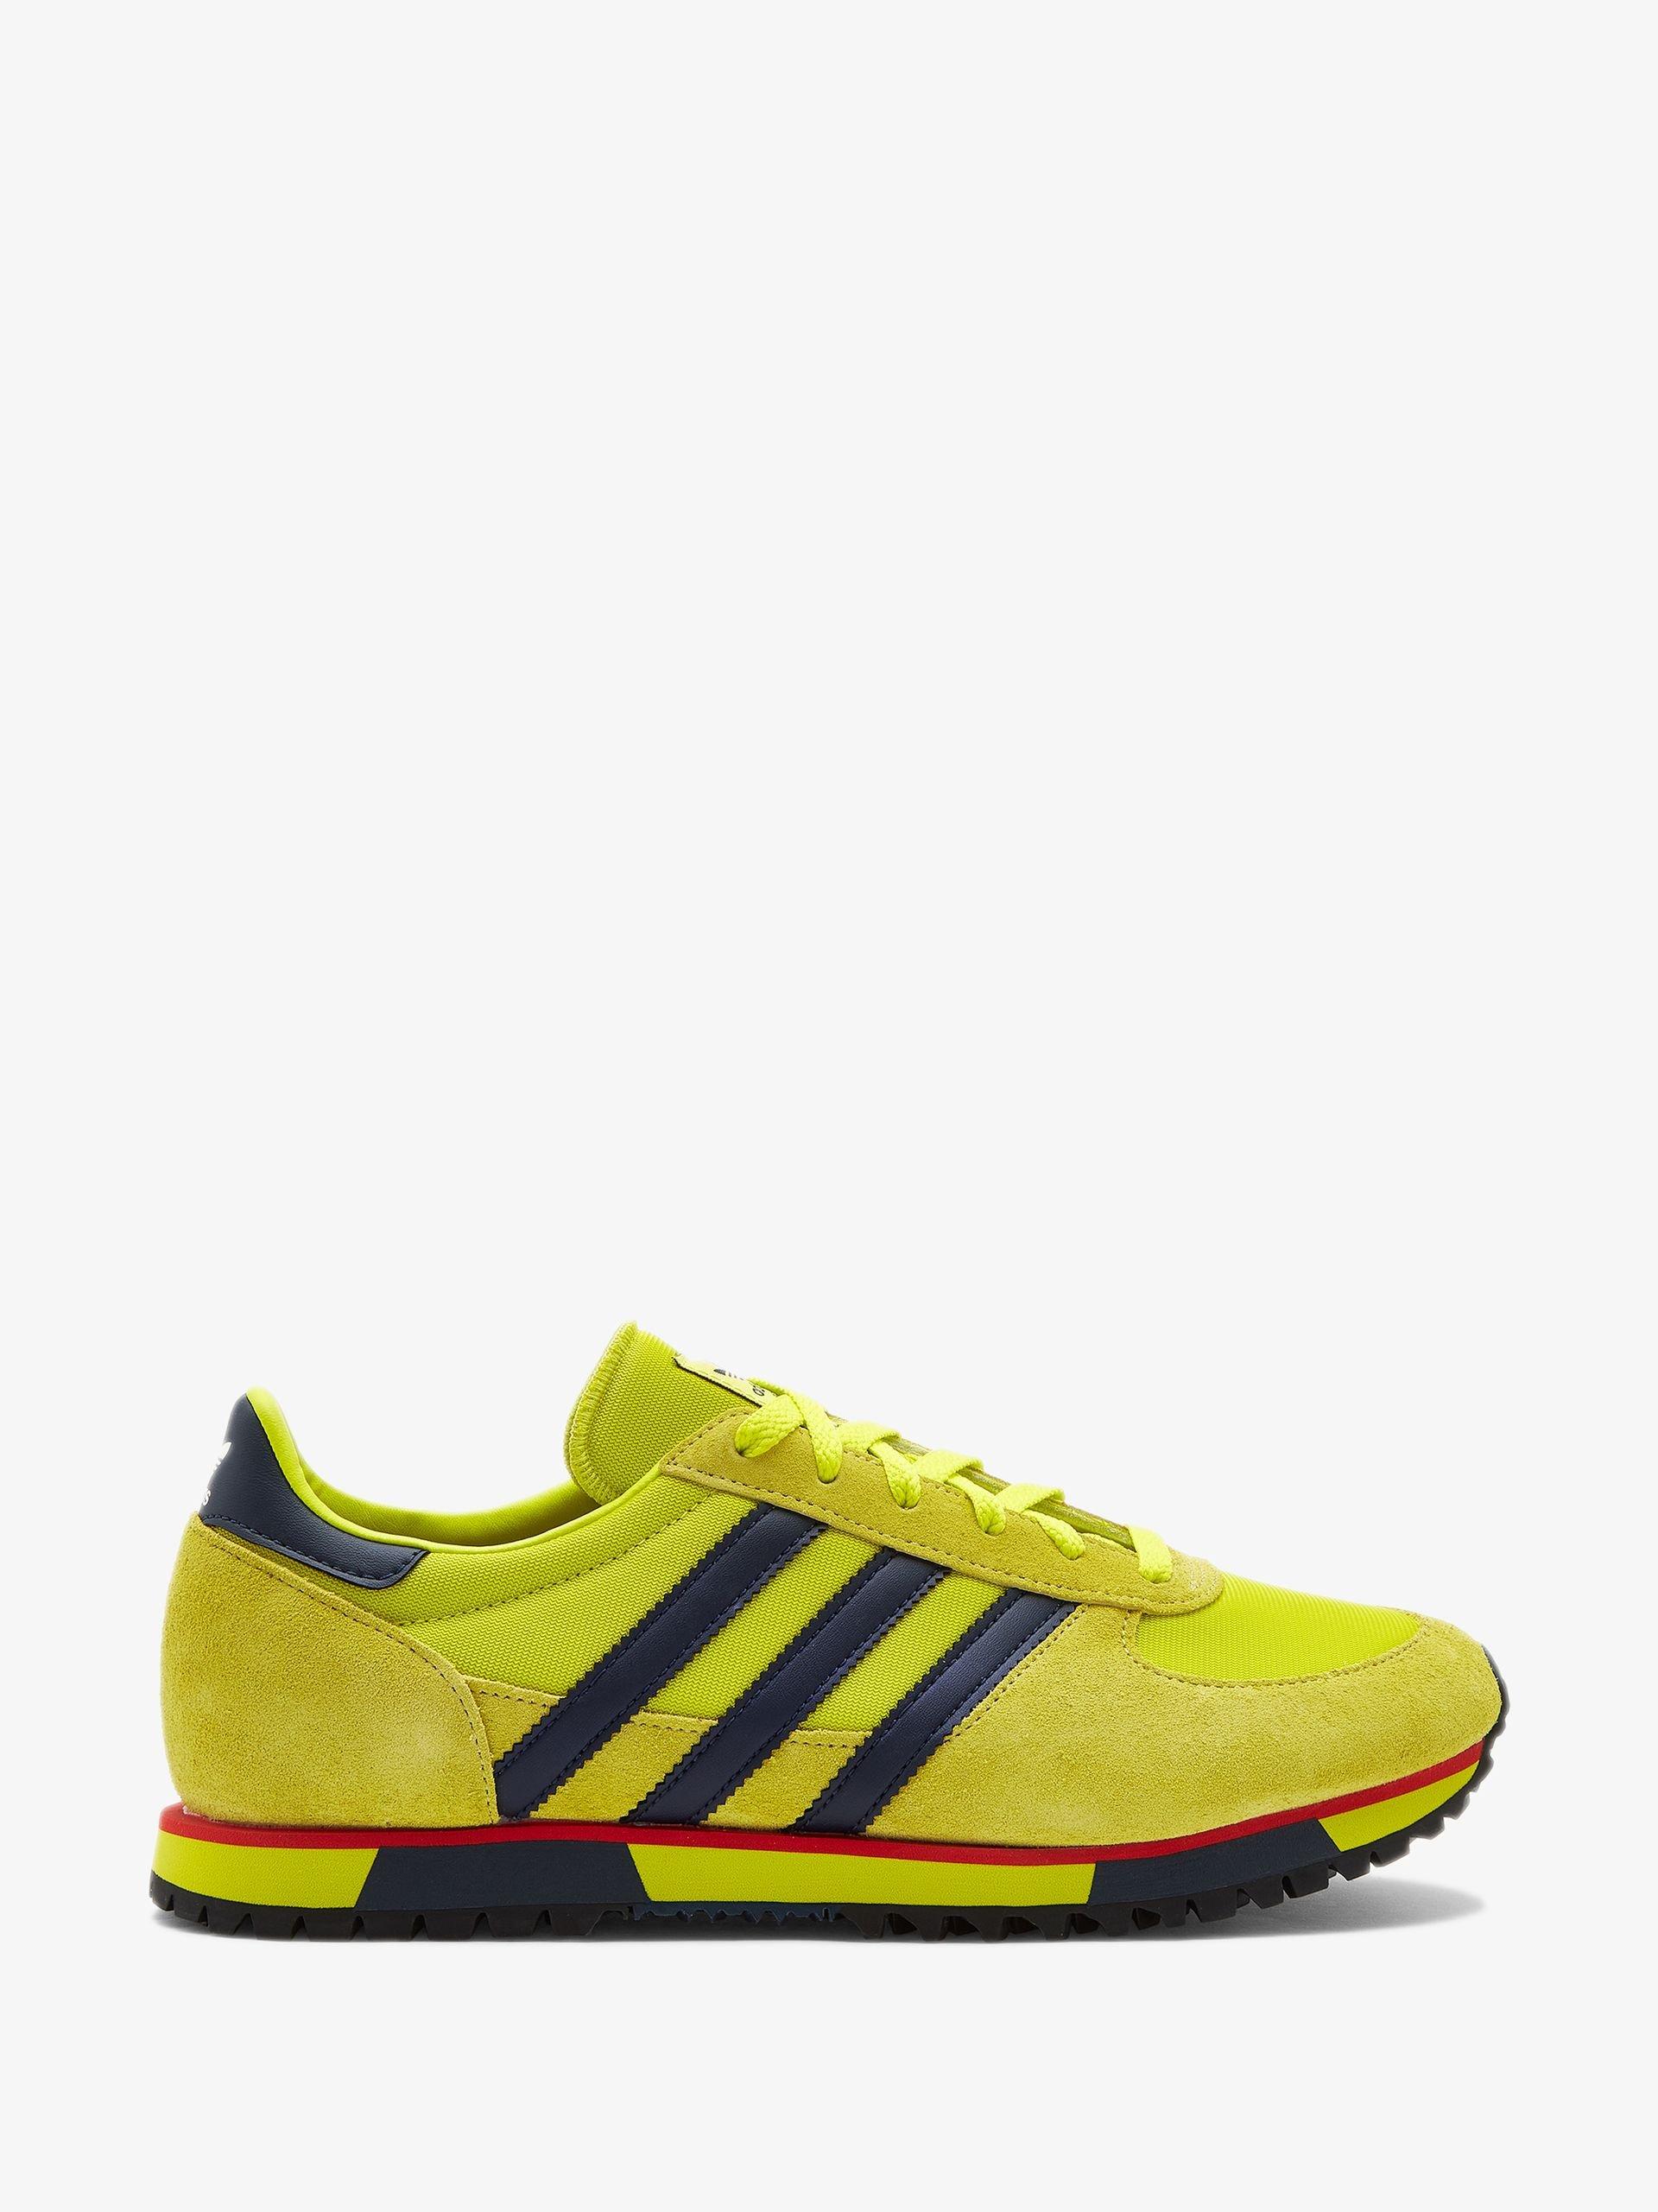 adidas Yellow Marathon 86 Sneakers for Men | Lyst